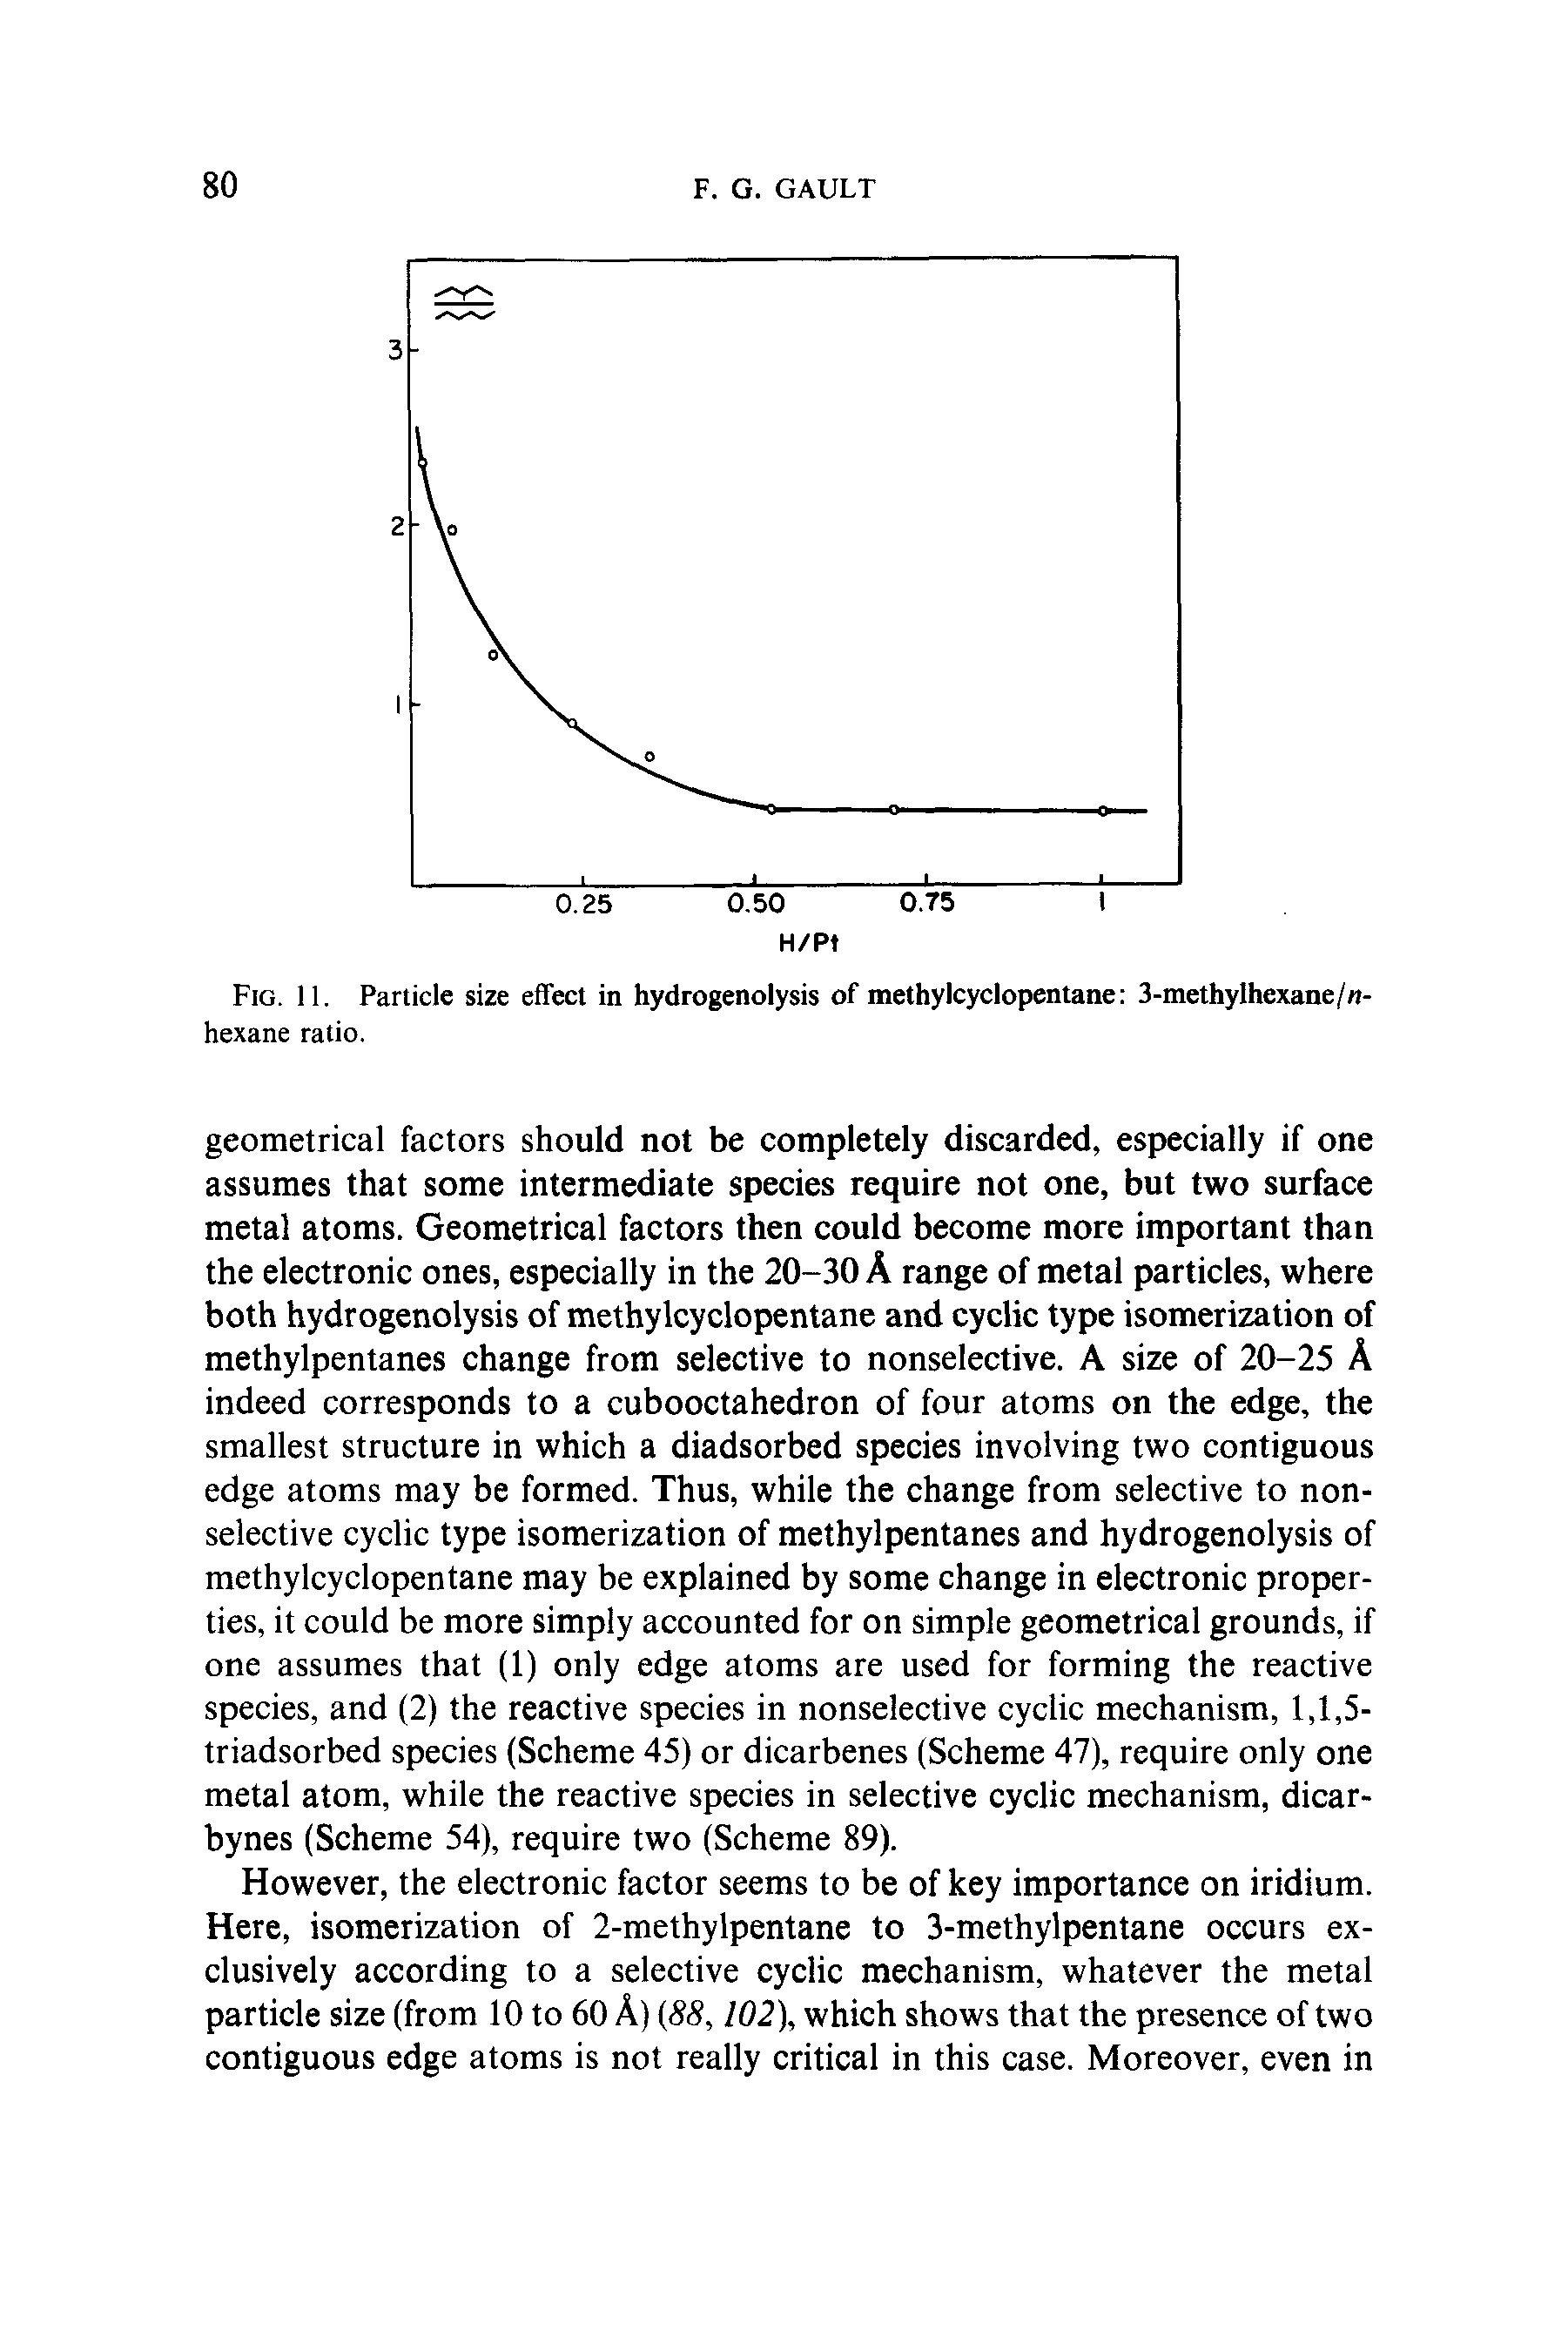 Fig. 11. Particle size effect in hydrogenolysis of methylcyclopentane 3-methylhexane/n-hexane ratio.